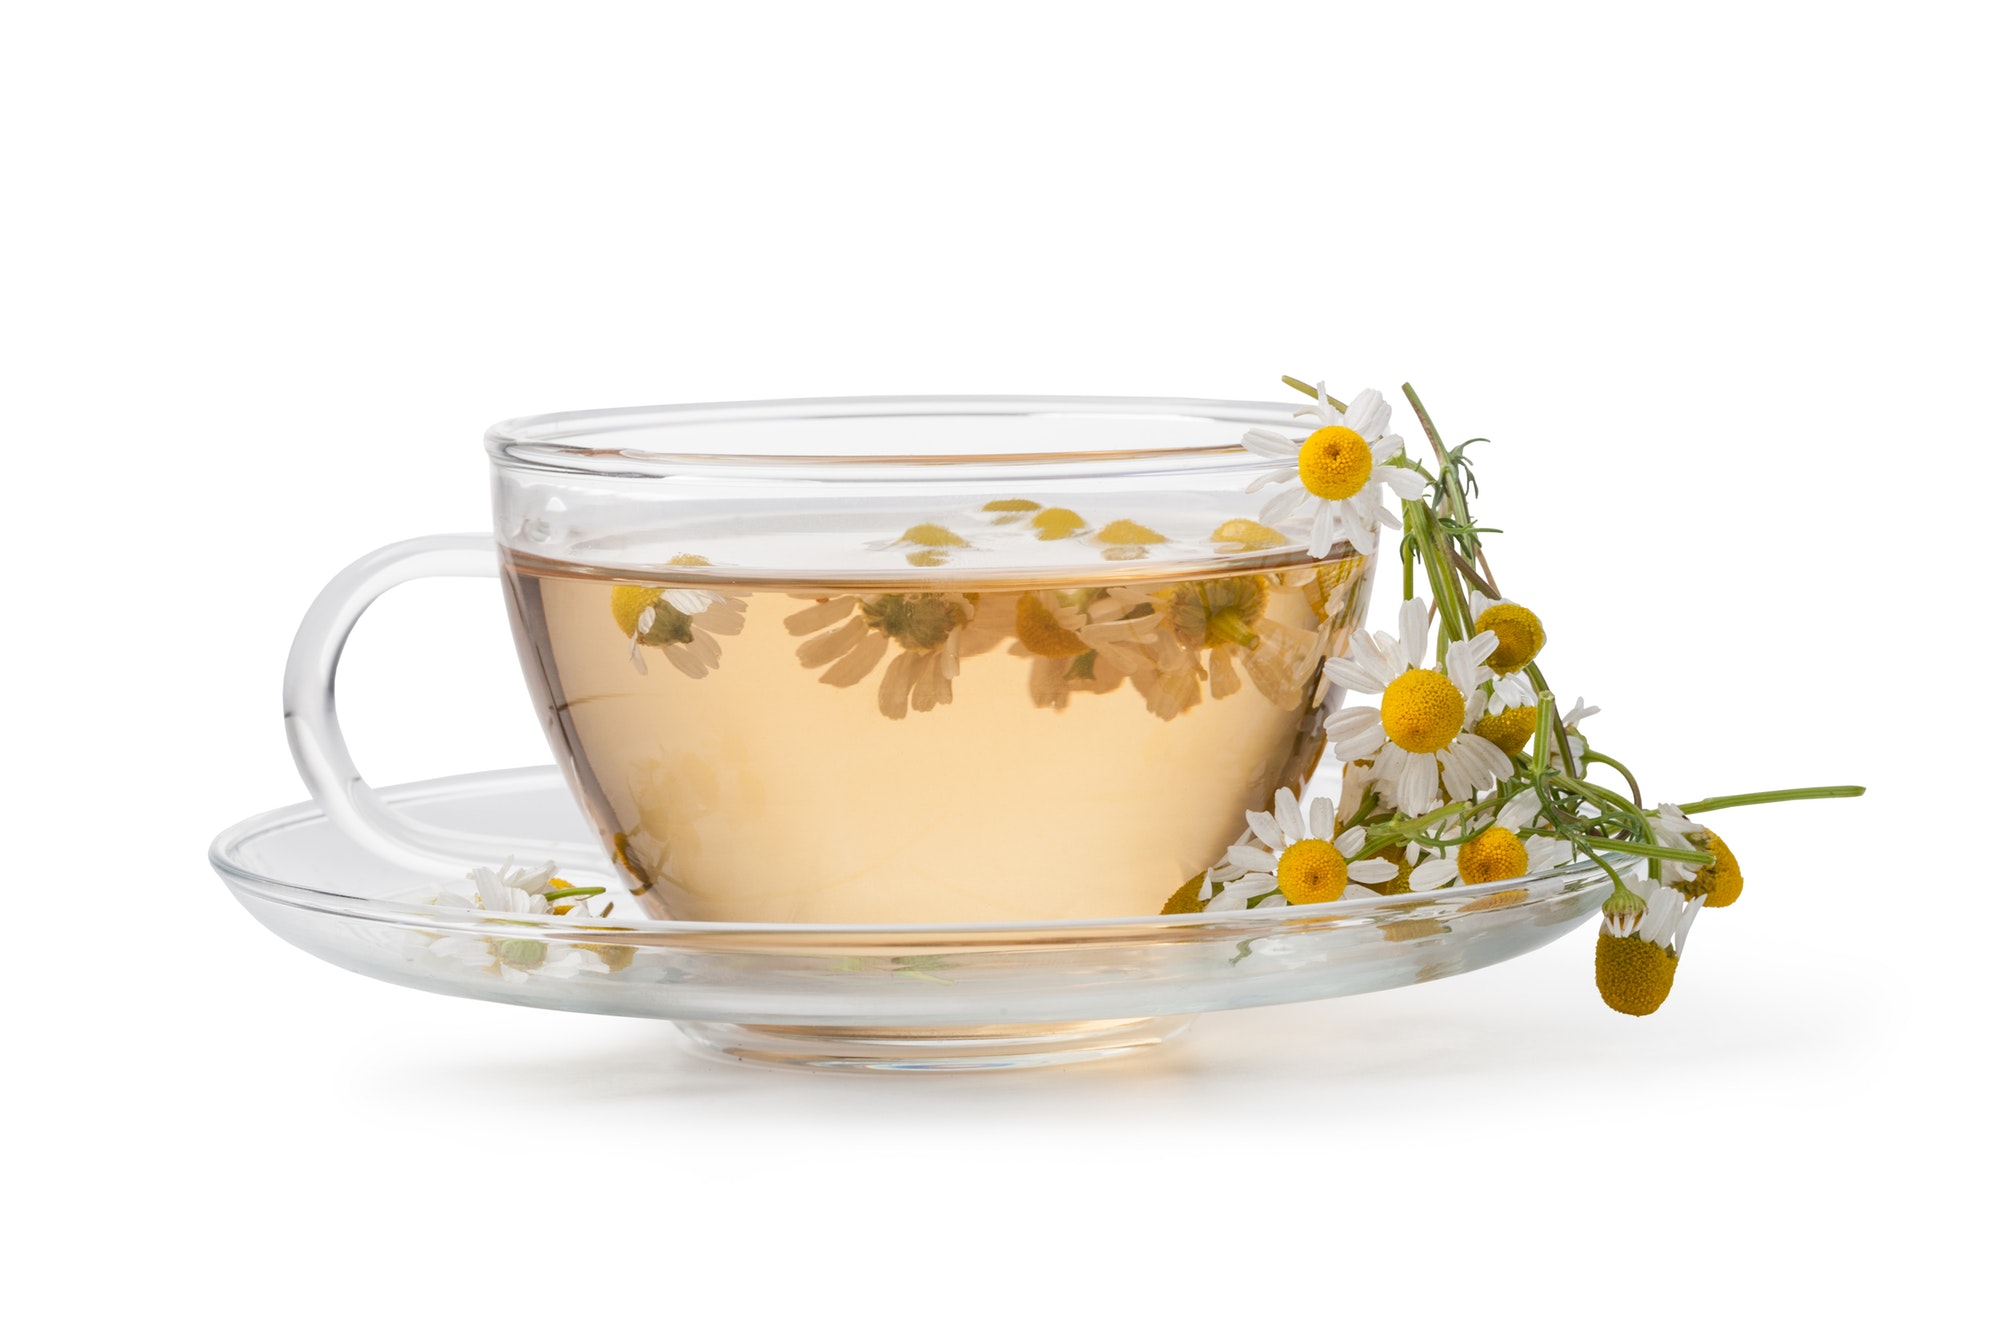 Cup of medicinal chamomile tea